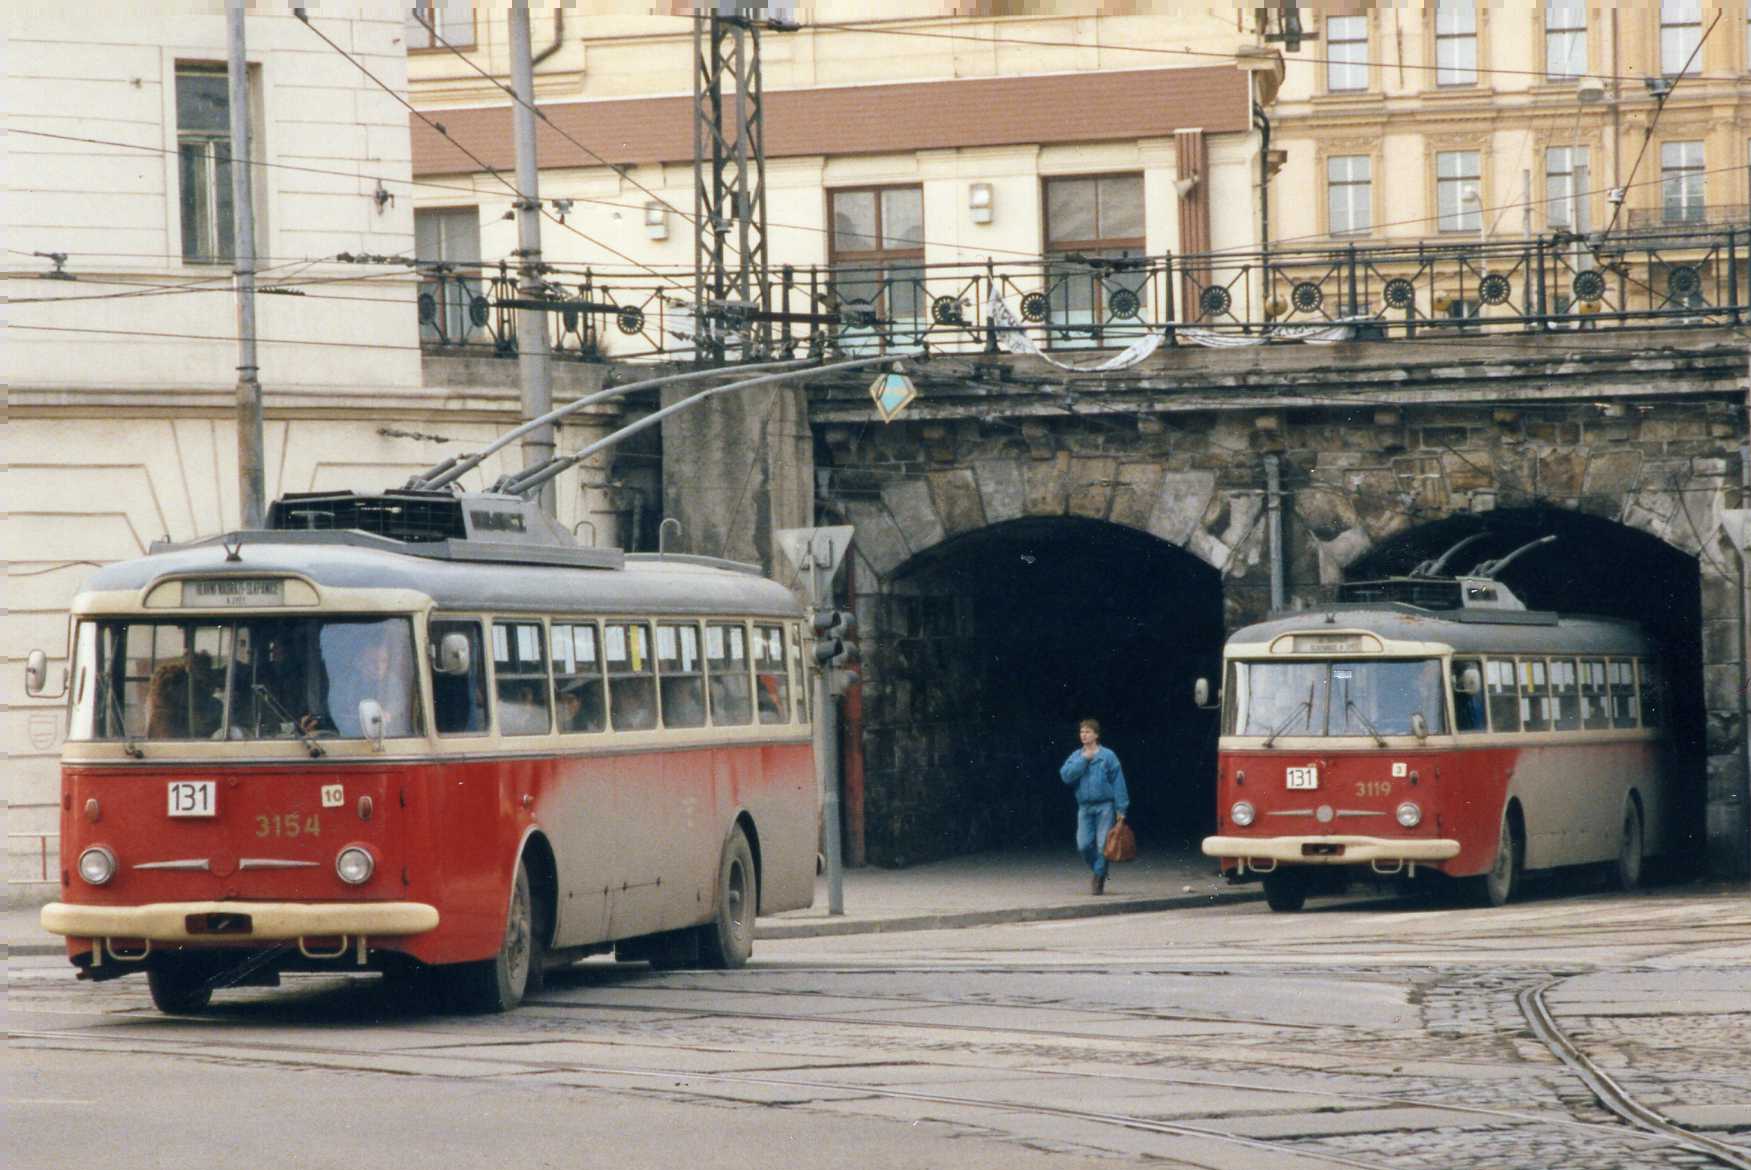 File:Brno Czechoslovakia. škoda 9Tr Trolleybuses nos 3154 and 3119,Linka 131  Brno. Feb 1992.jpg - Wikimedia Commons